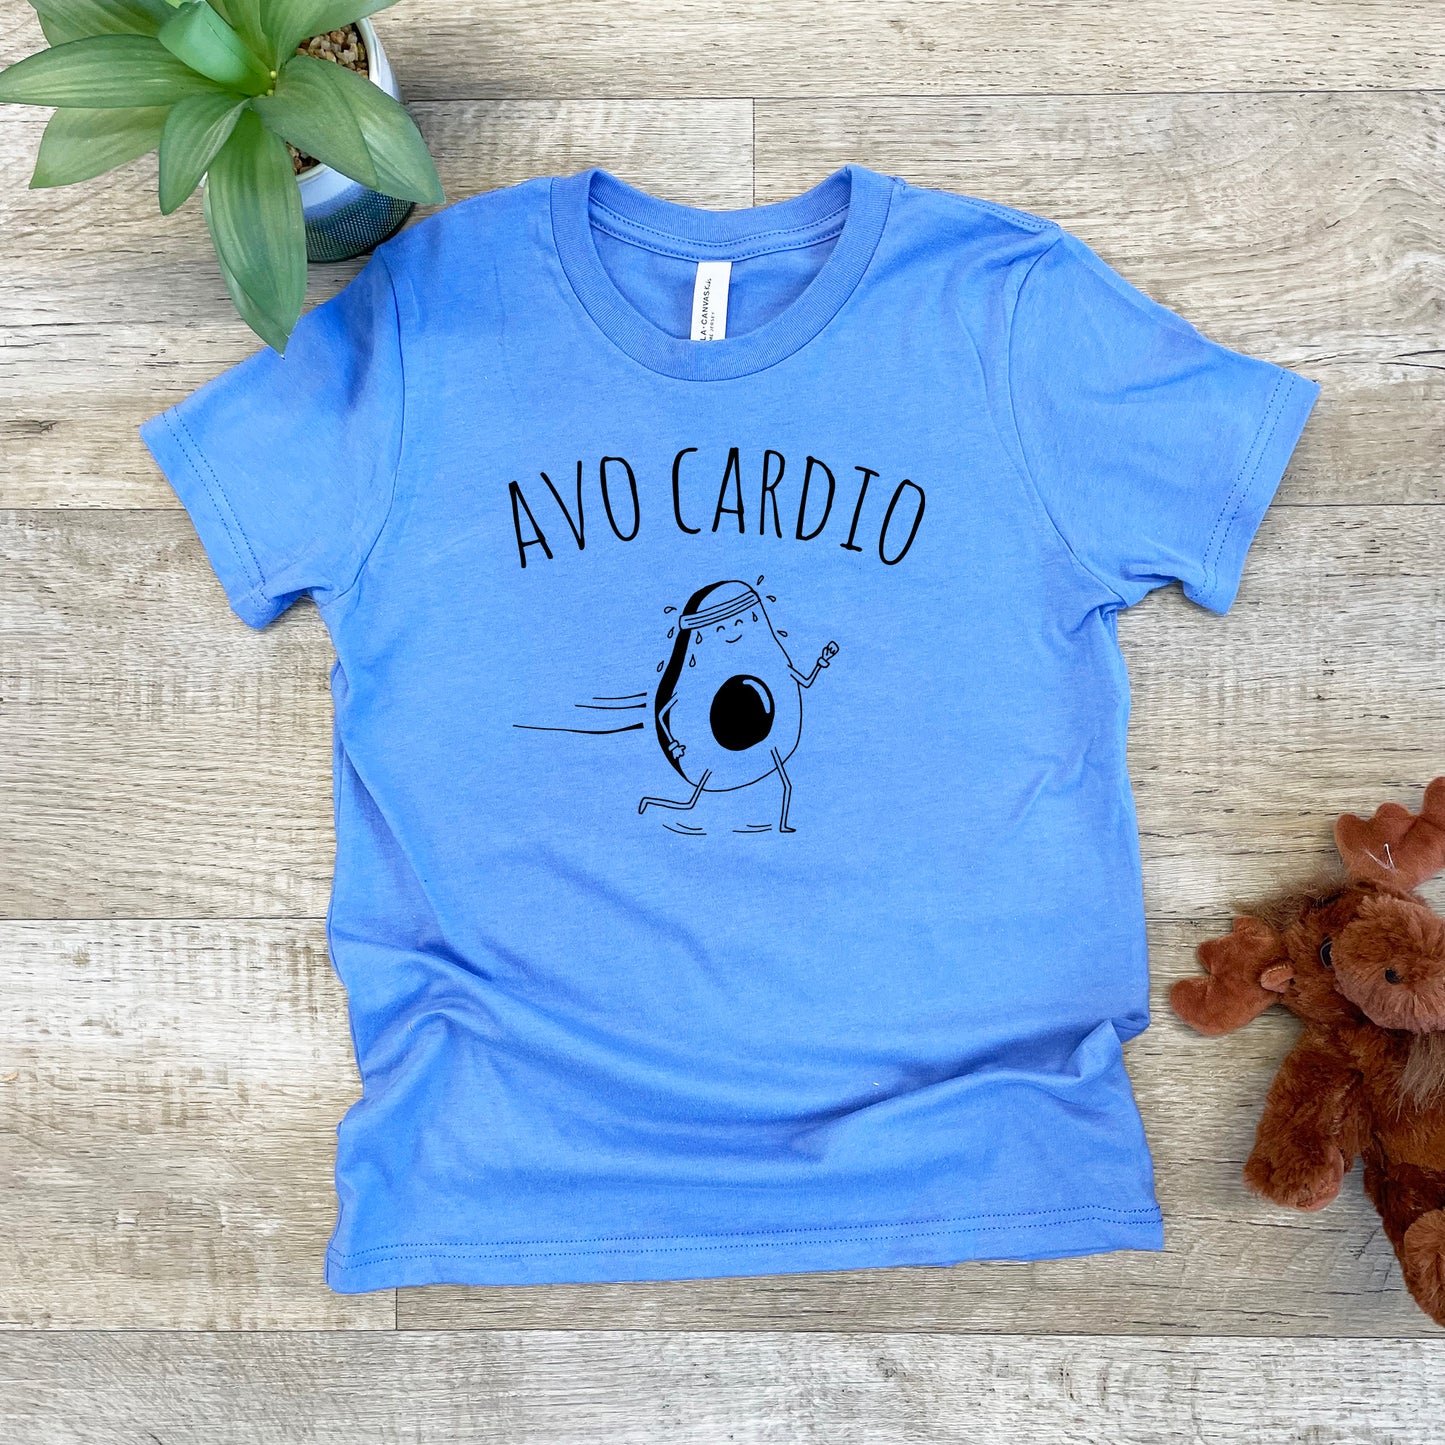 Avo Cardio (Avocado) - Kid's Tee - Columbia Blue or Lavender